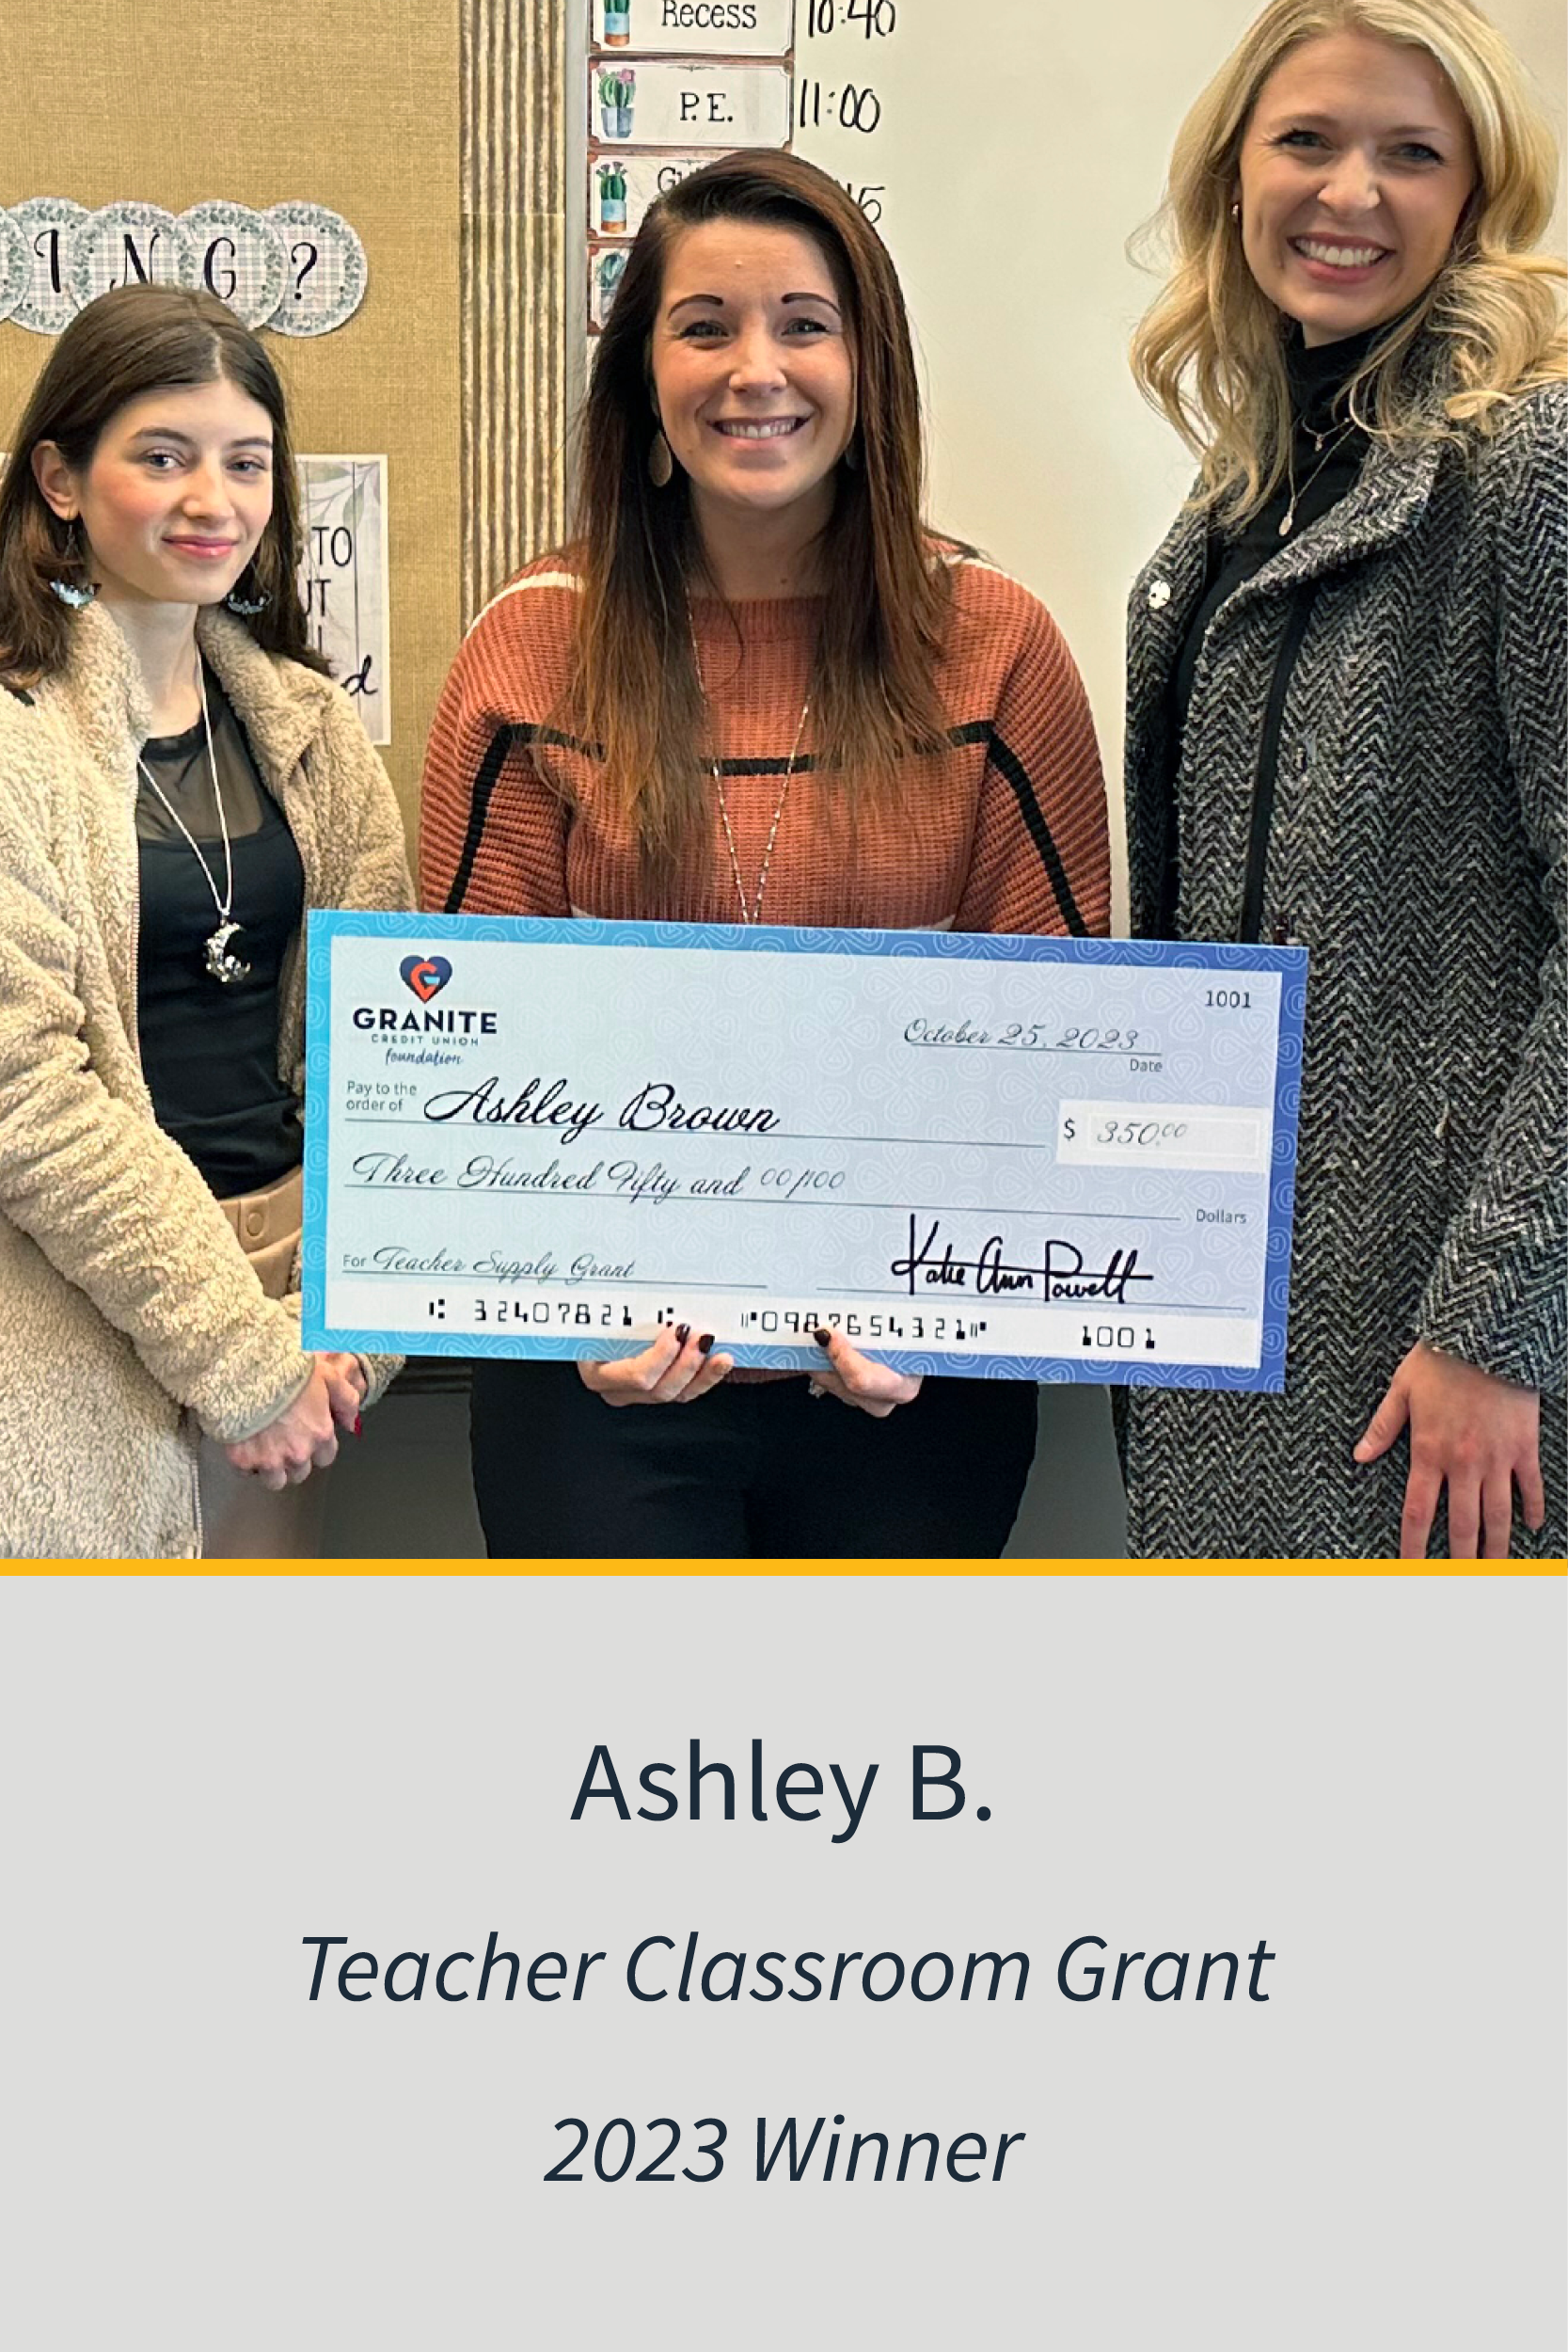 Teachers Classroom Grant 2023 Winner Ashley B.